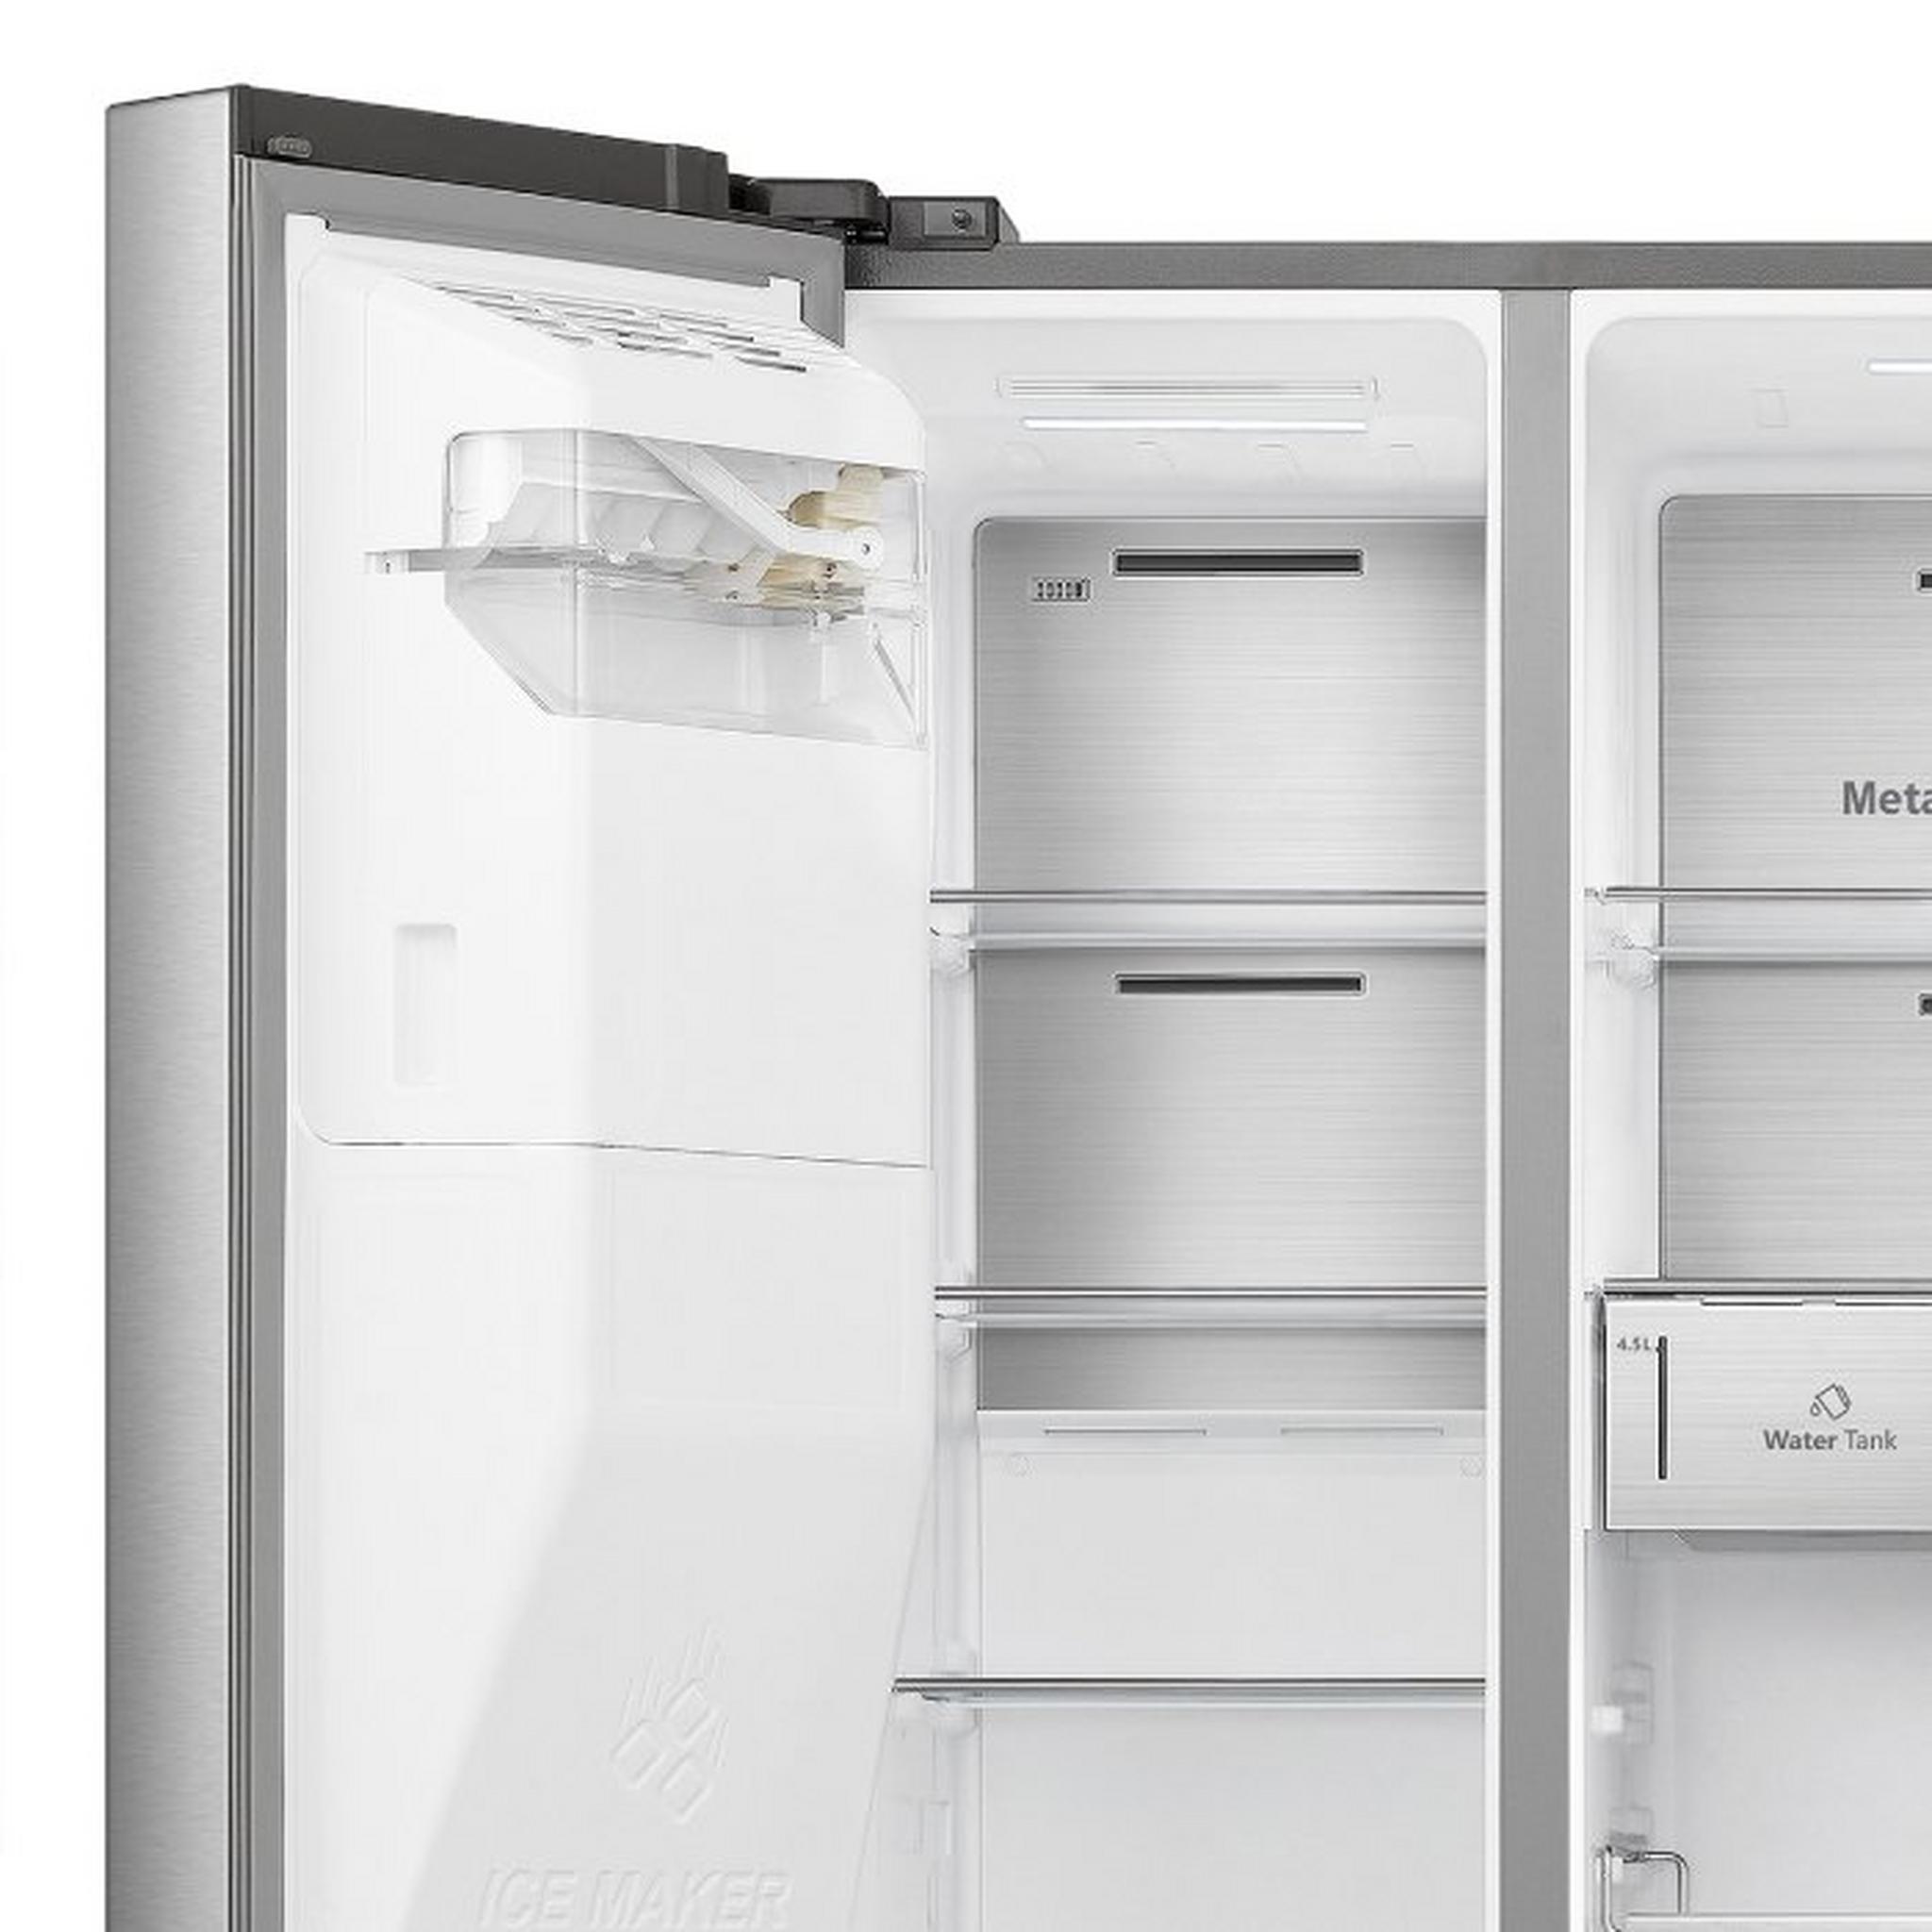 Hisense Side by Side Refrigerator, 29 CFT, 819 Liters, RS819N4ISU – Inox